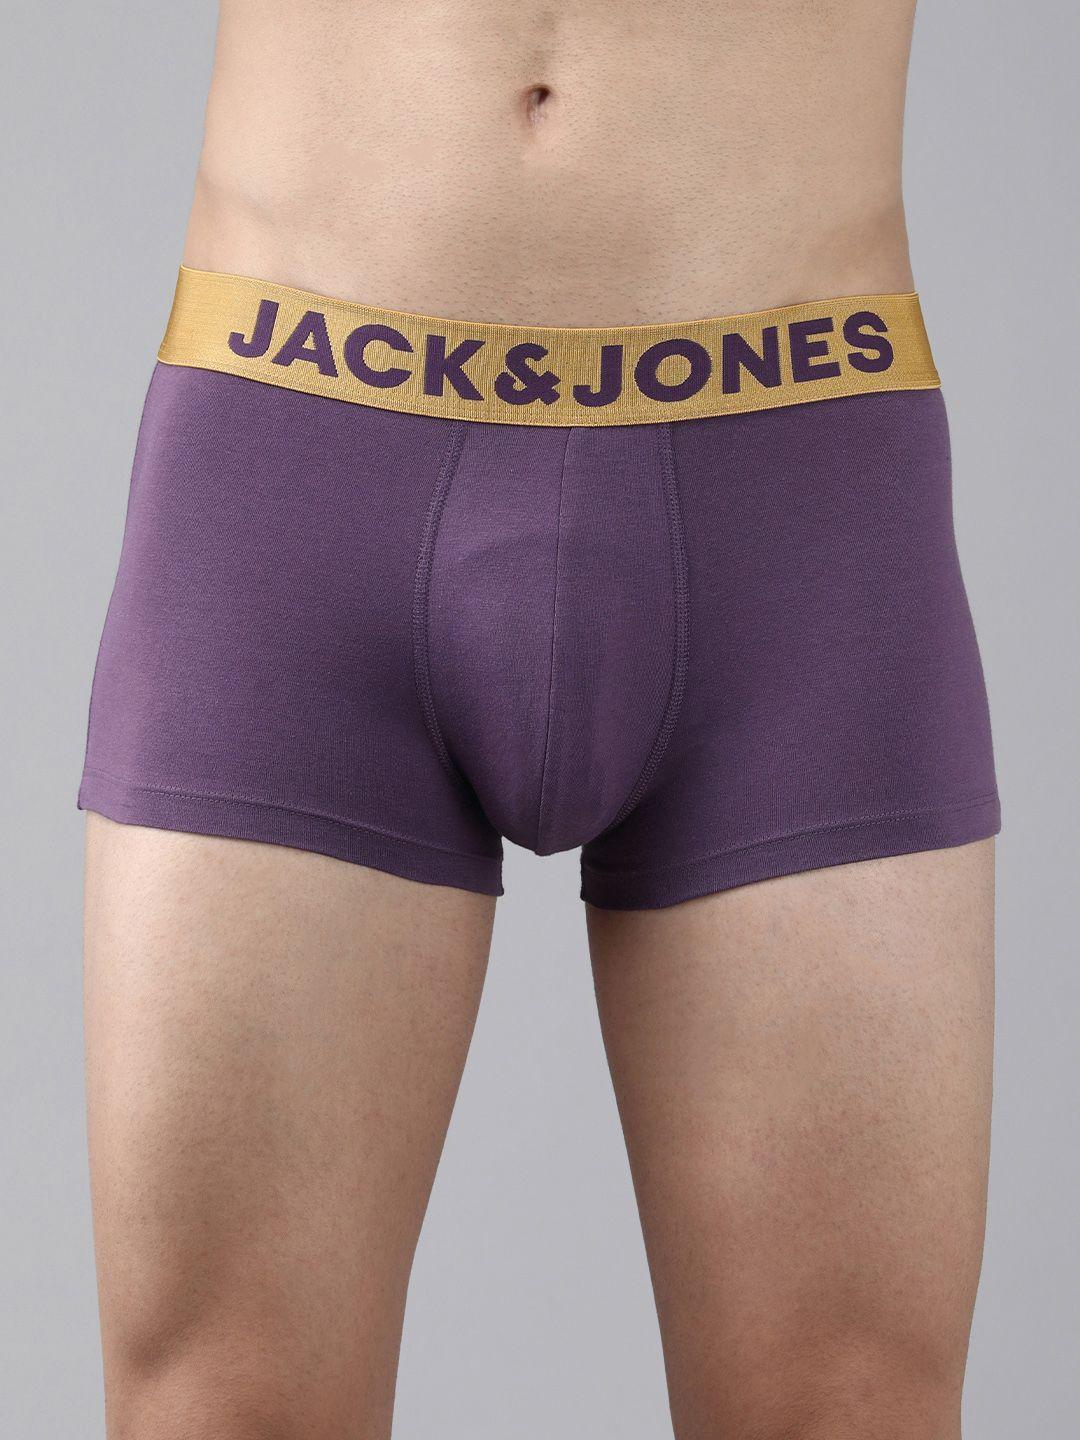 jack & jones men purple solid anti-microbial trunk 1036688011